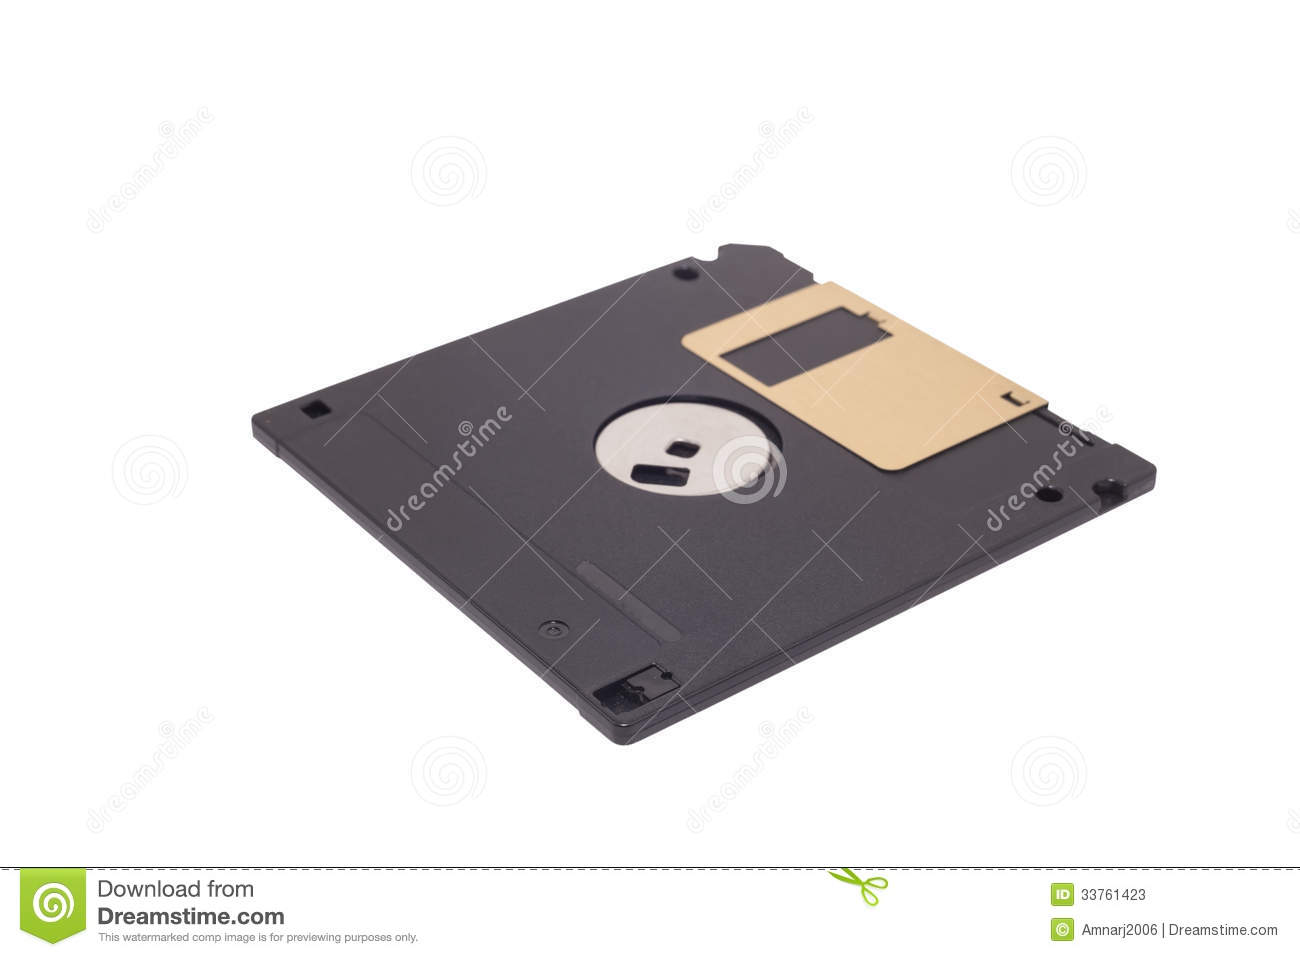 Computer Floppy Disk Icon